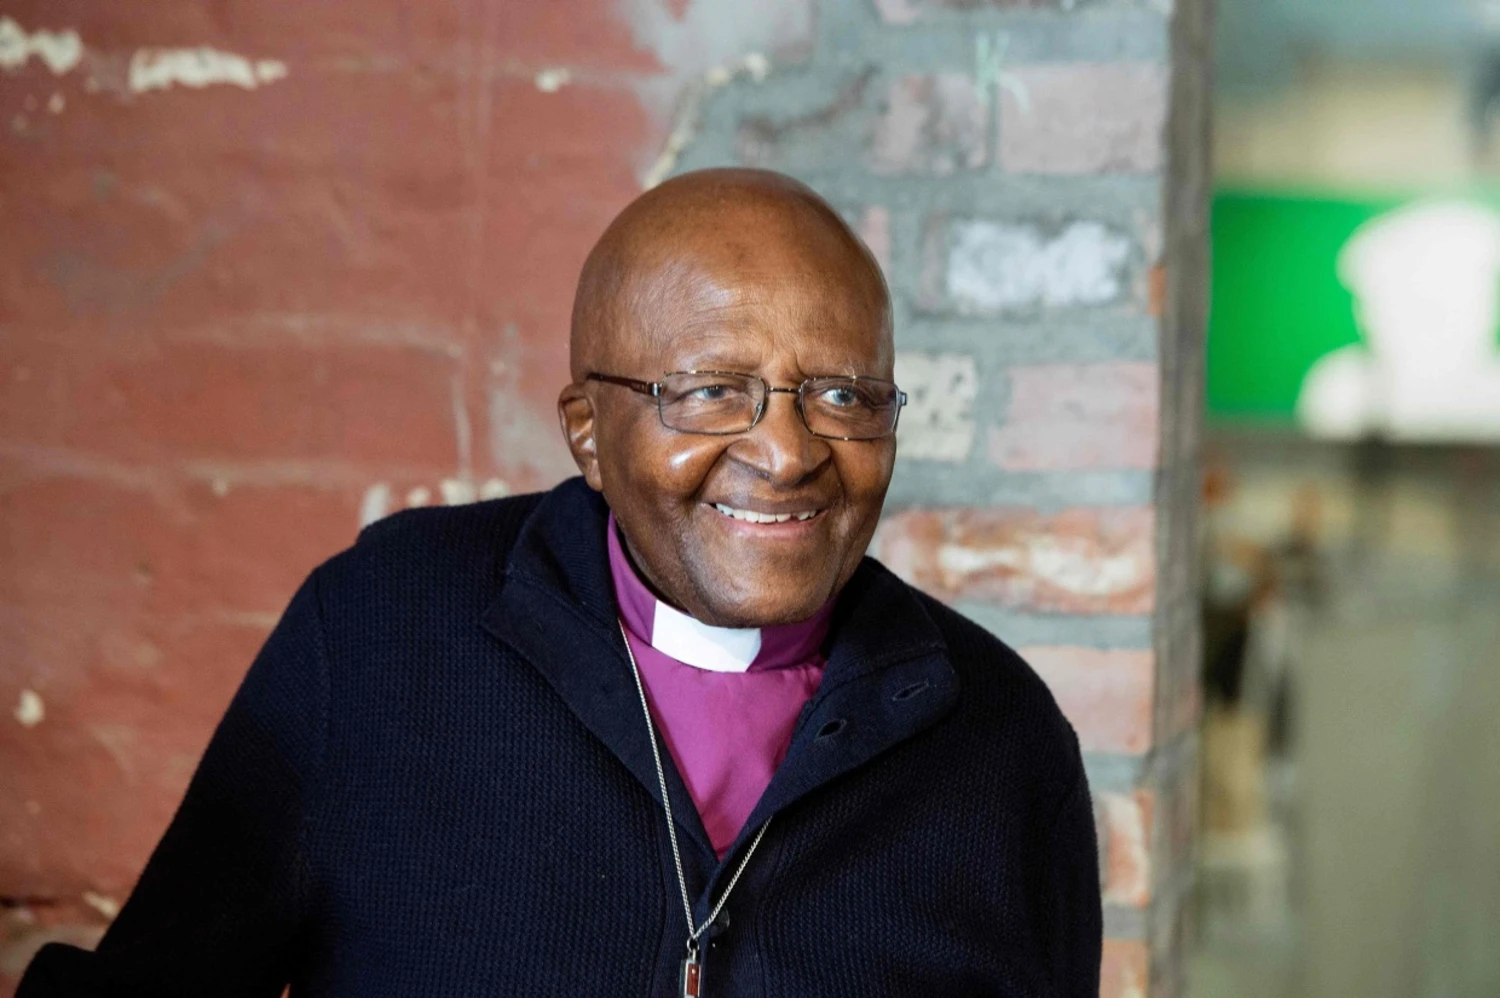 South Africa’s Anti-Apartheid Icon, Archbishop Desmond Tutu Dies At 90